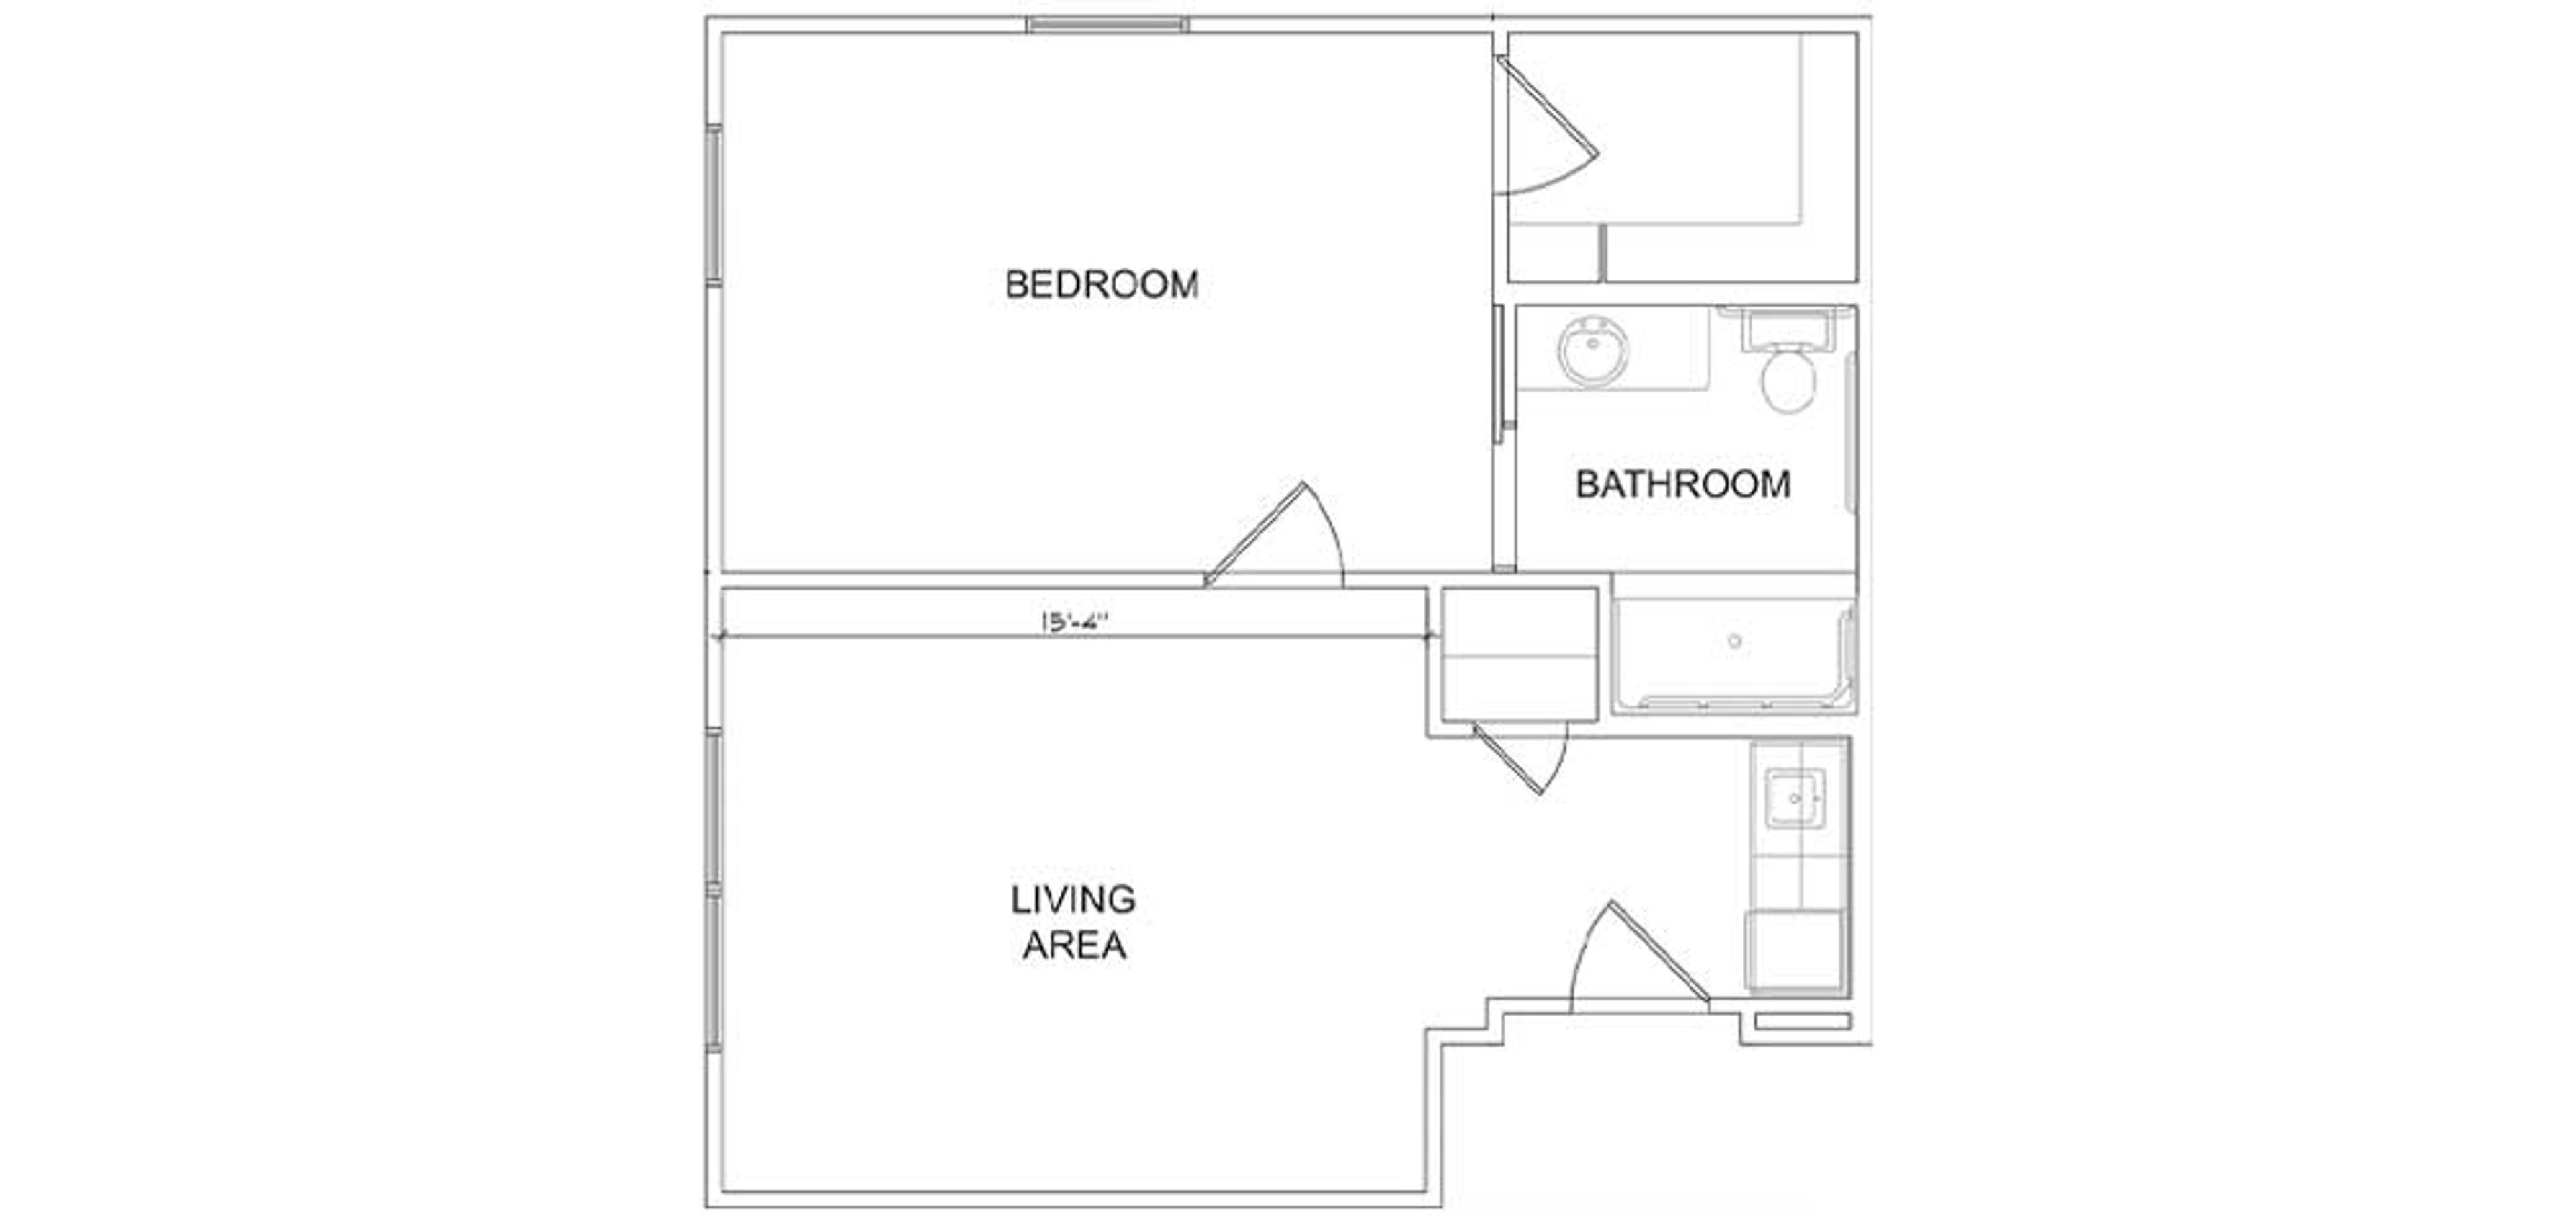 Floorplan - Pecan Pointe - 1B 1B Luxury